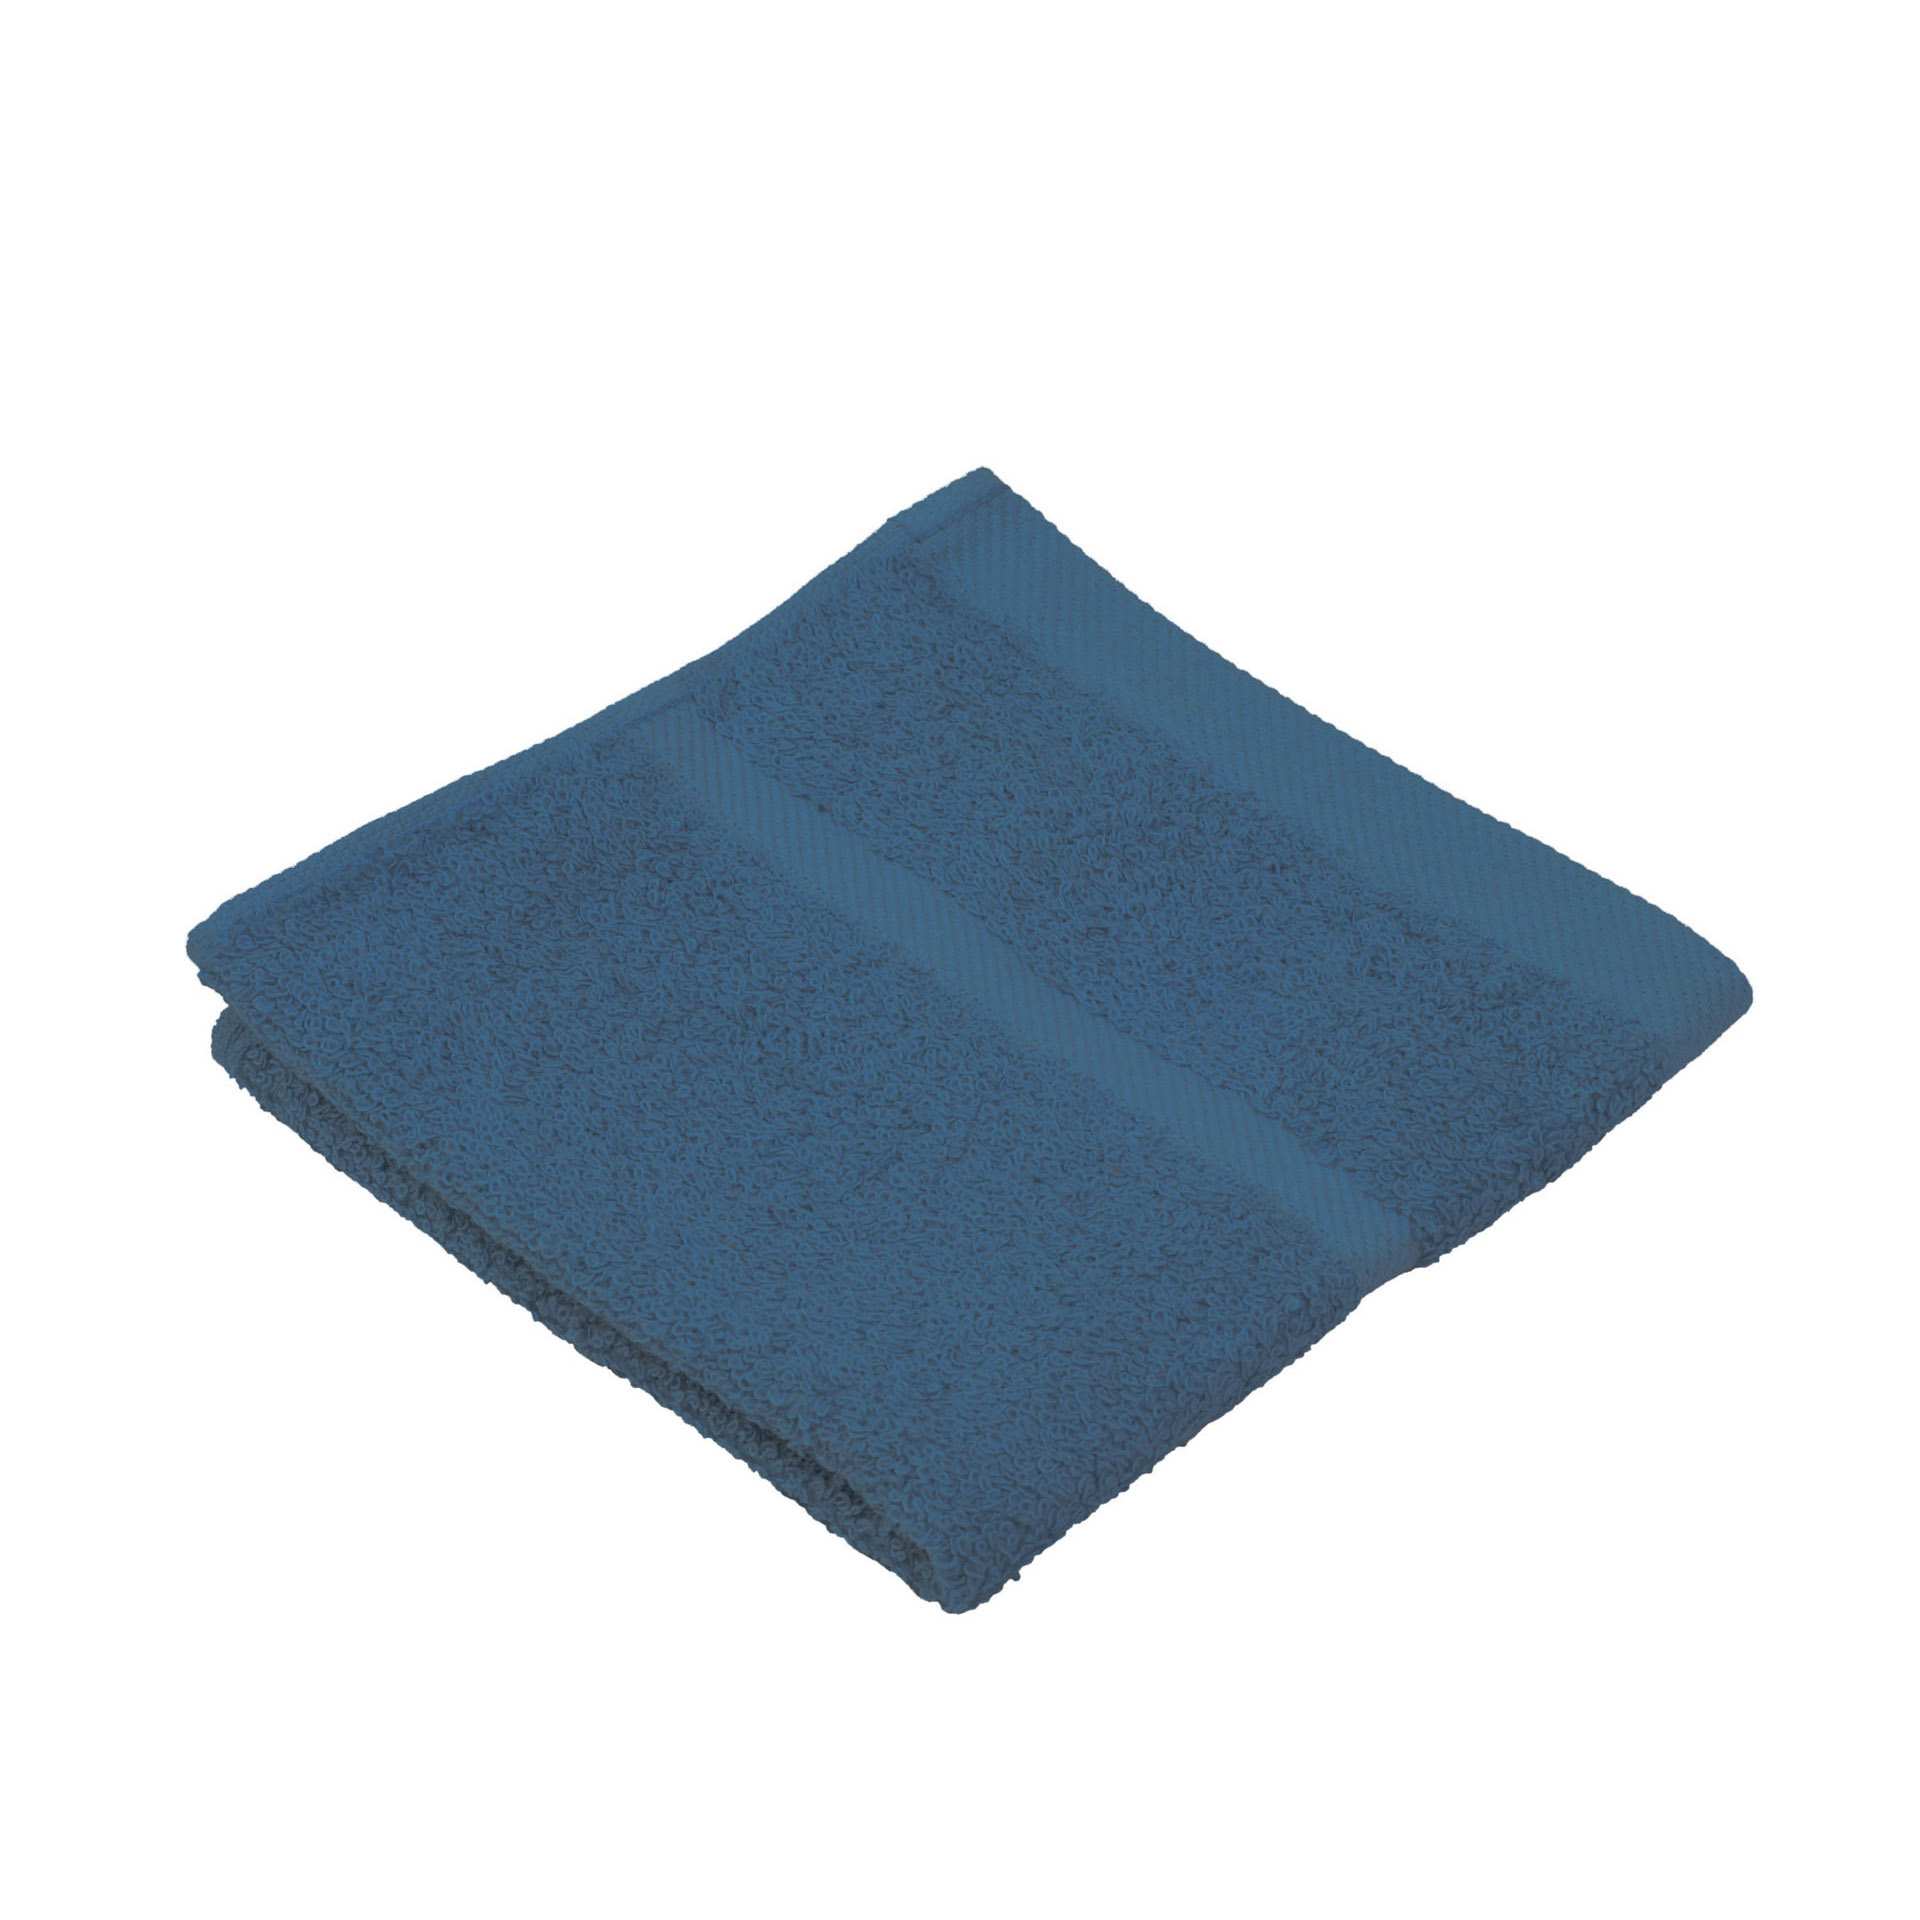 Seiftuch - 4-seitig gesäumt - Serie SYLT - kobaltblau - Abm. 30 x 30 cm - Baumwolle - 7881-51-2-D